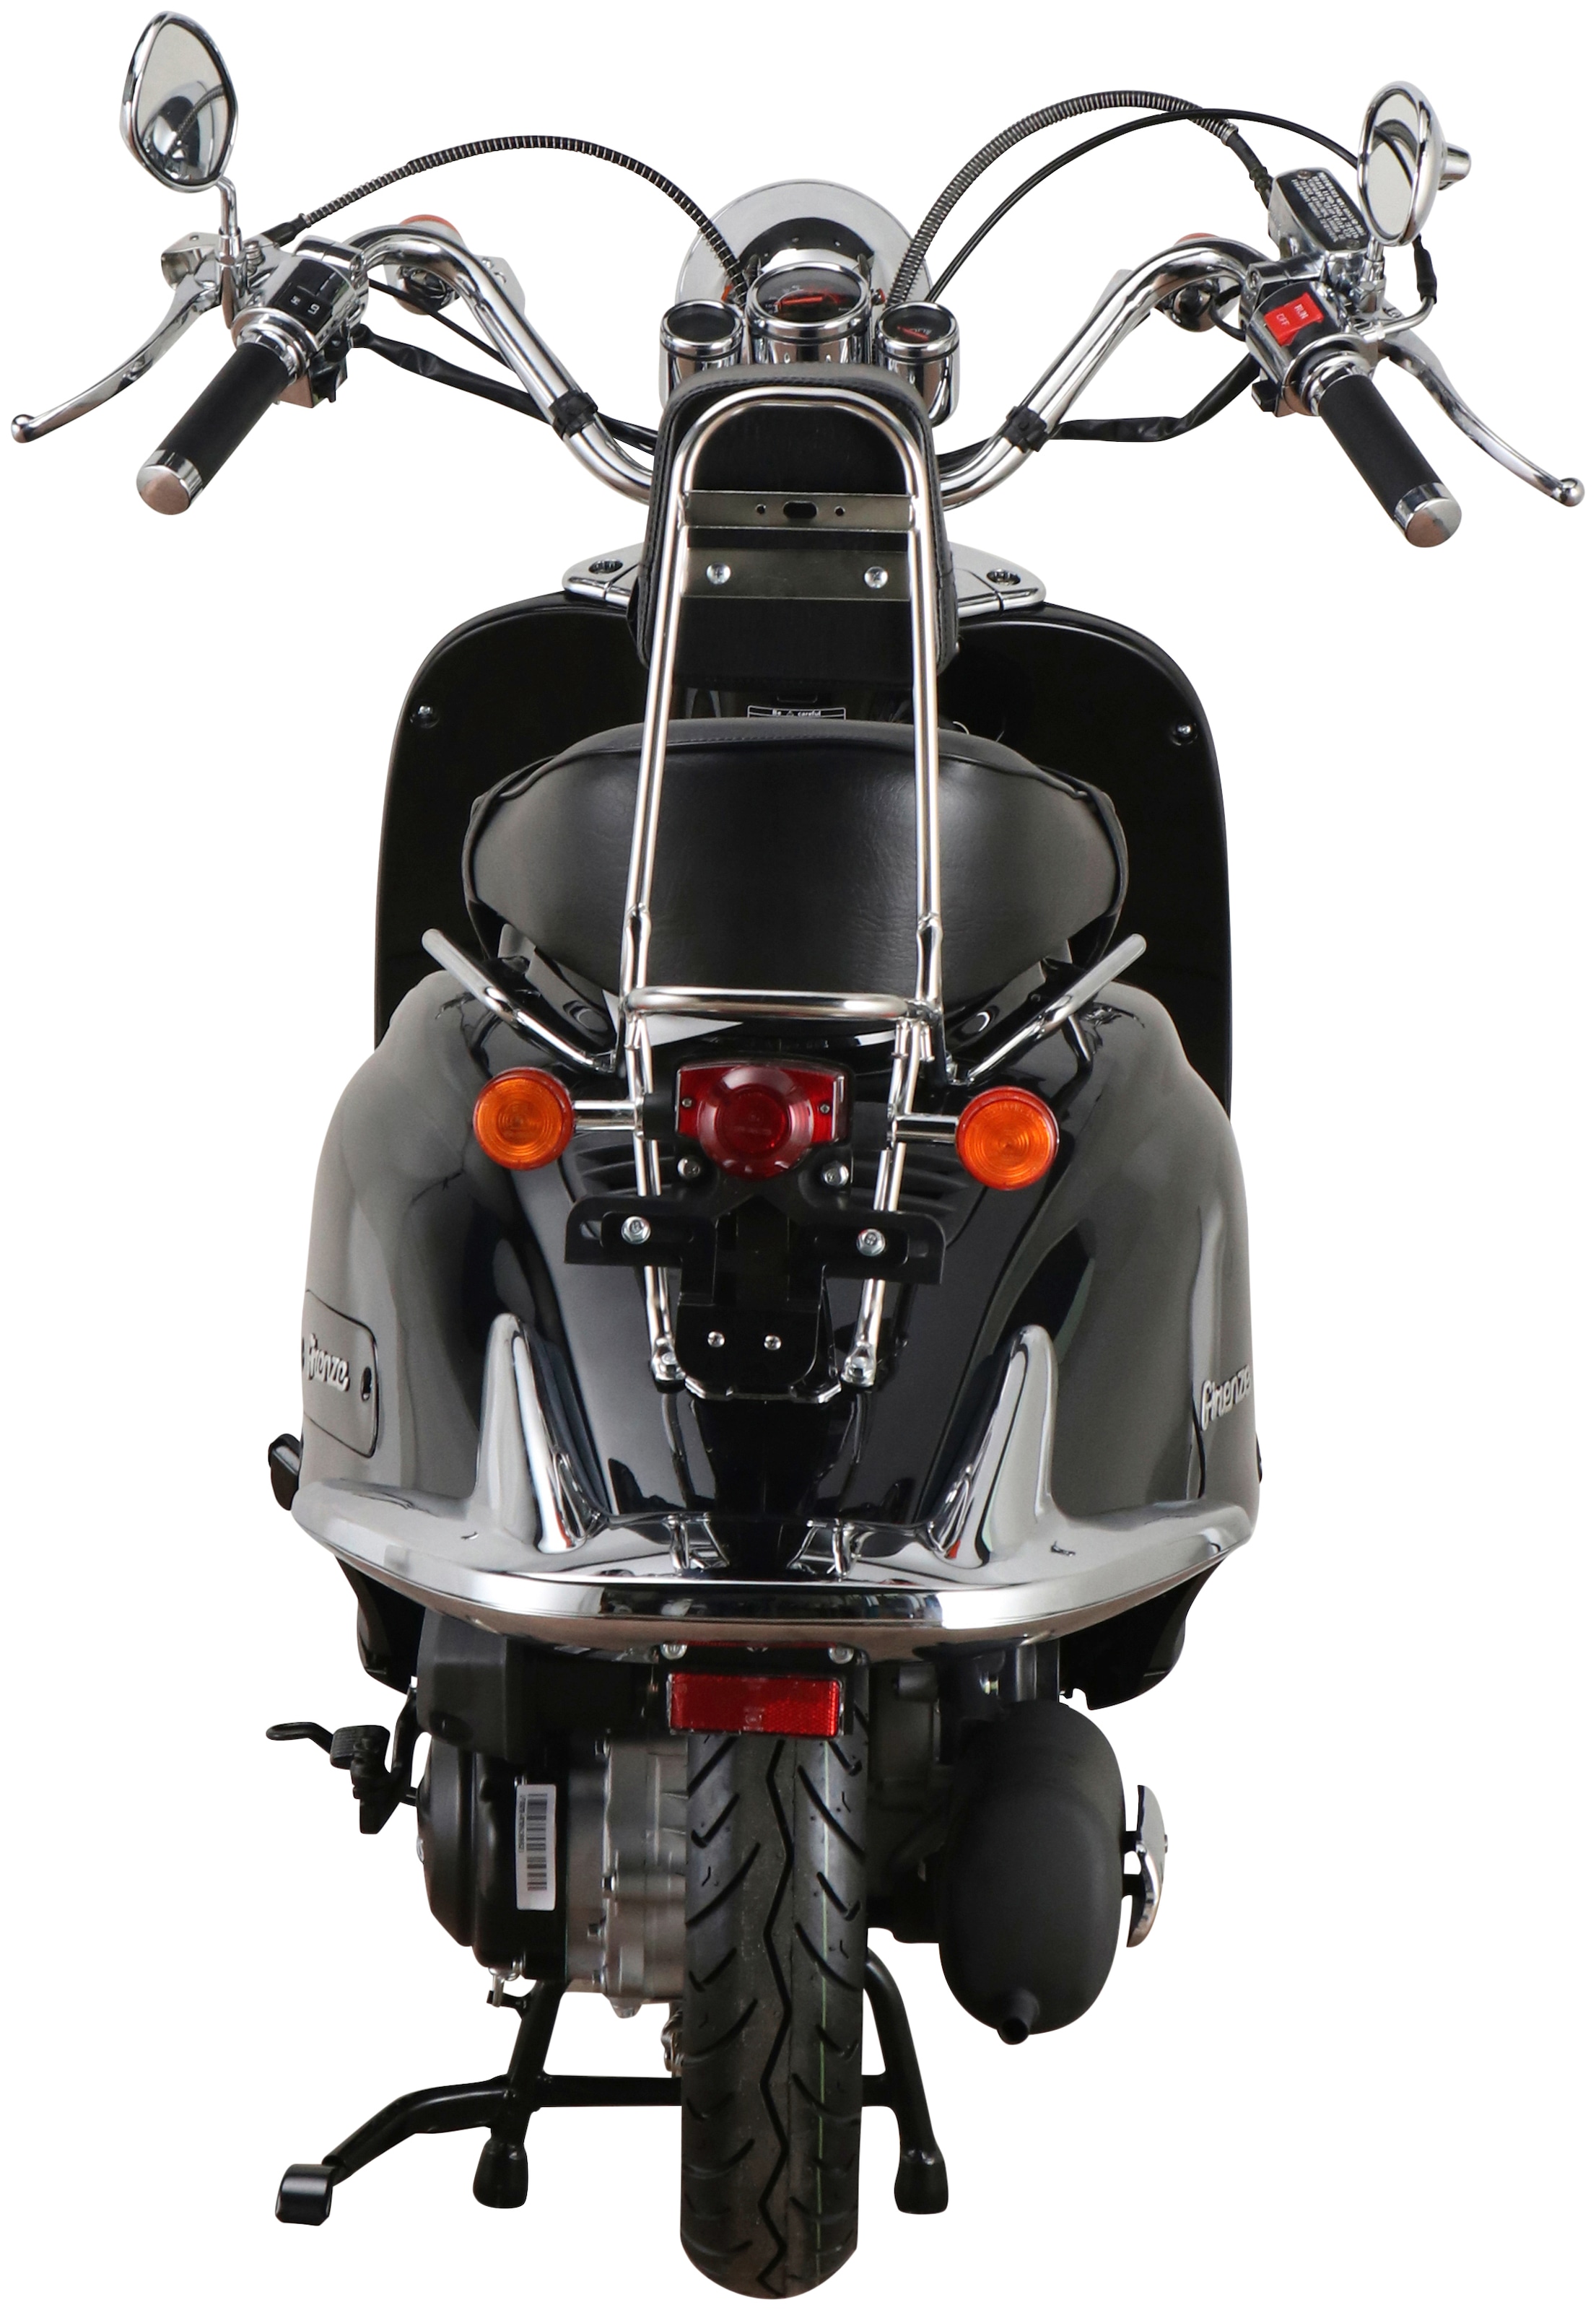 Alpha Motors Motorroller »Retro Firenze«, 50 cm³, 45 km/h, Euro 5, 3 PS  jetzt im %Sale